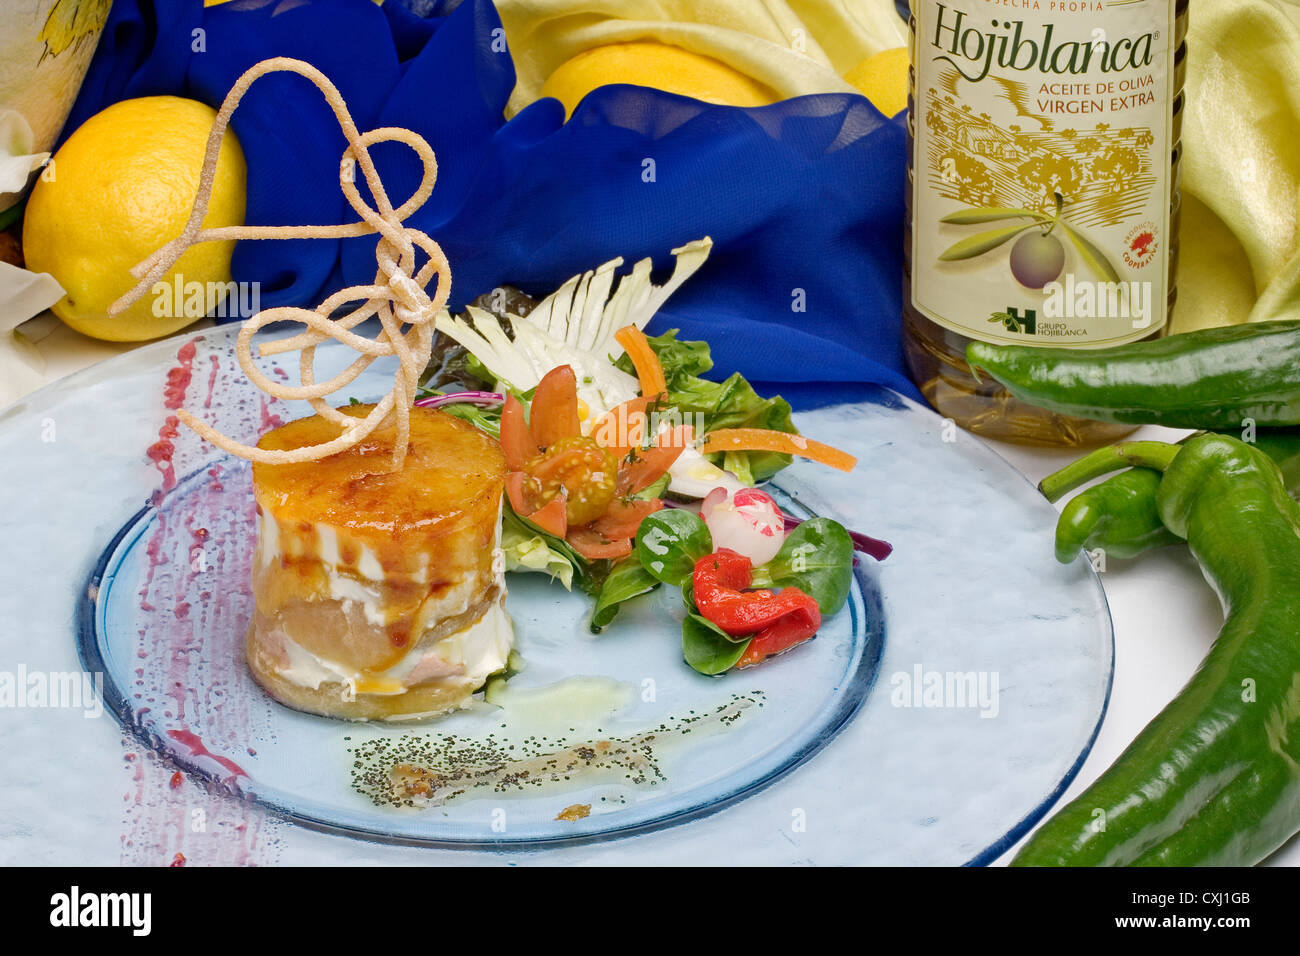 Pastete Mousse Torte mit mediterranen Salat Tartaleta de Maus de Pate con Ensalada mediterranea Stockfoto